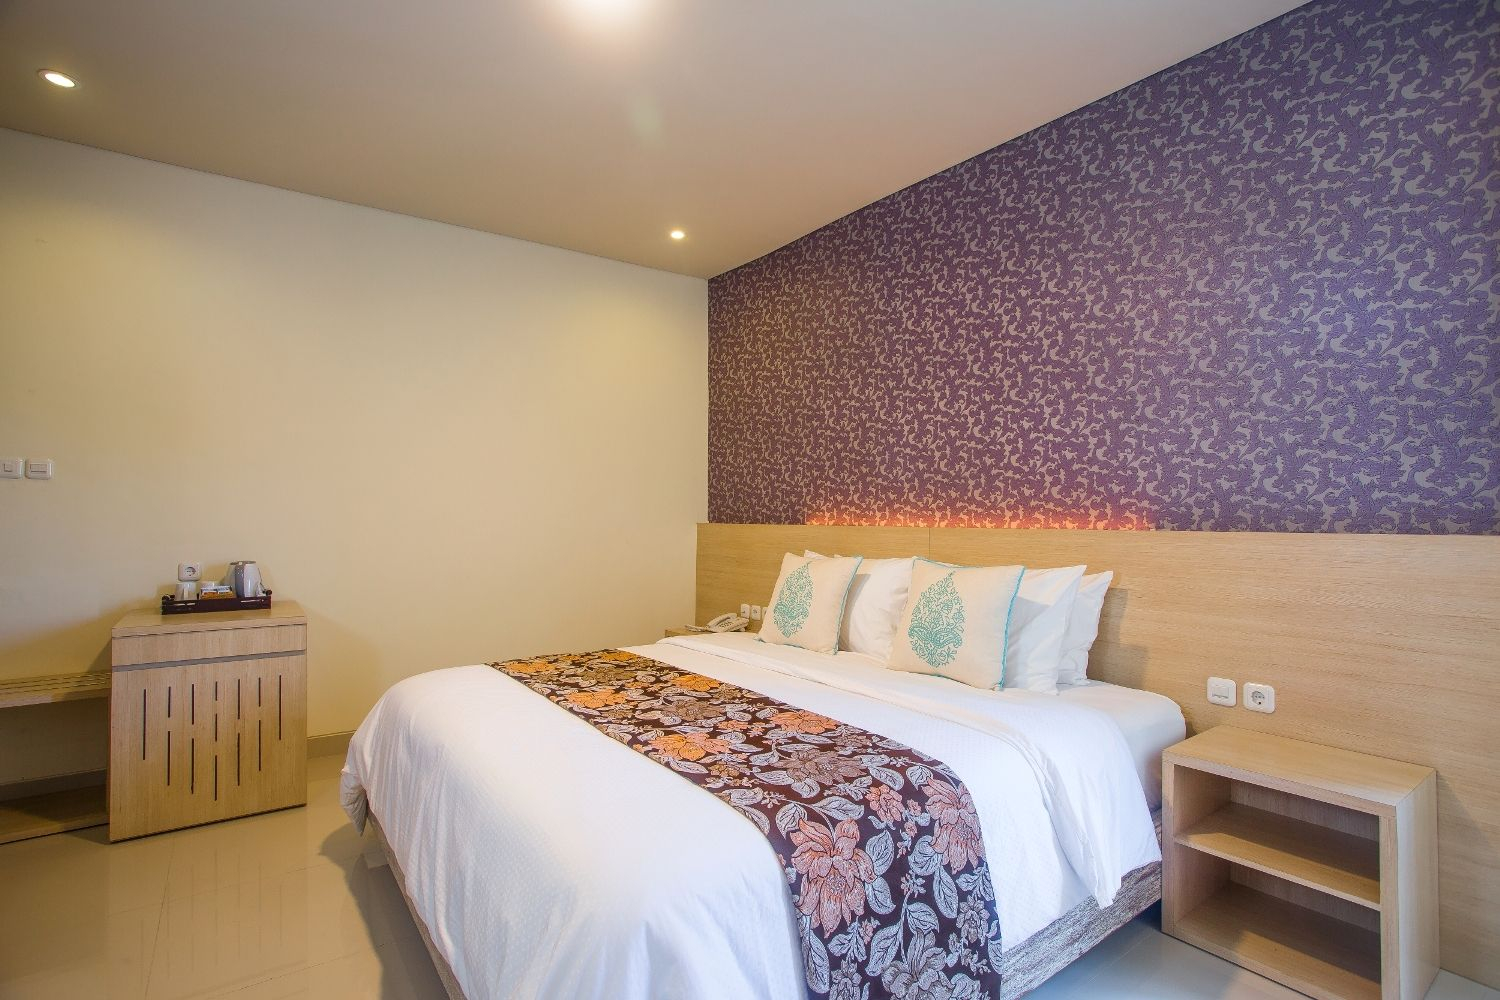 Bedroom 3, Maha Laksmi Boutique Hotel, Denpasar